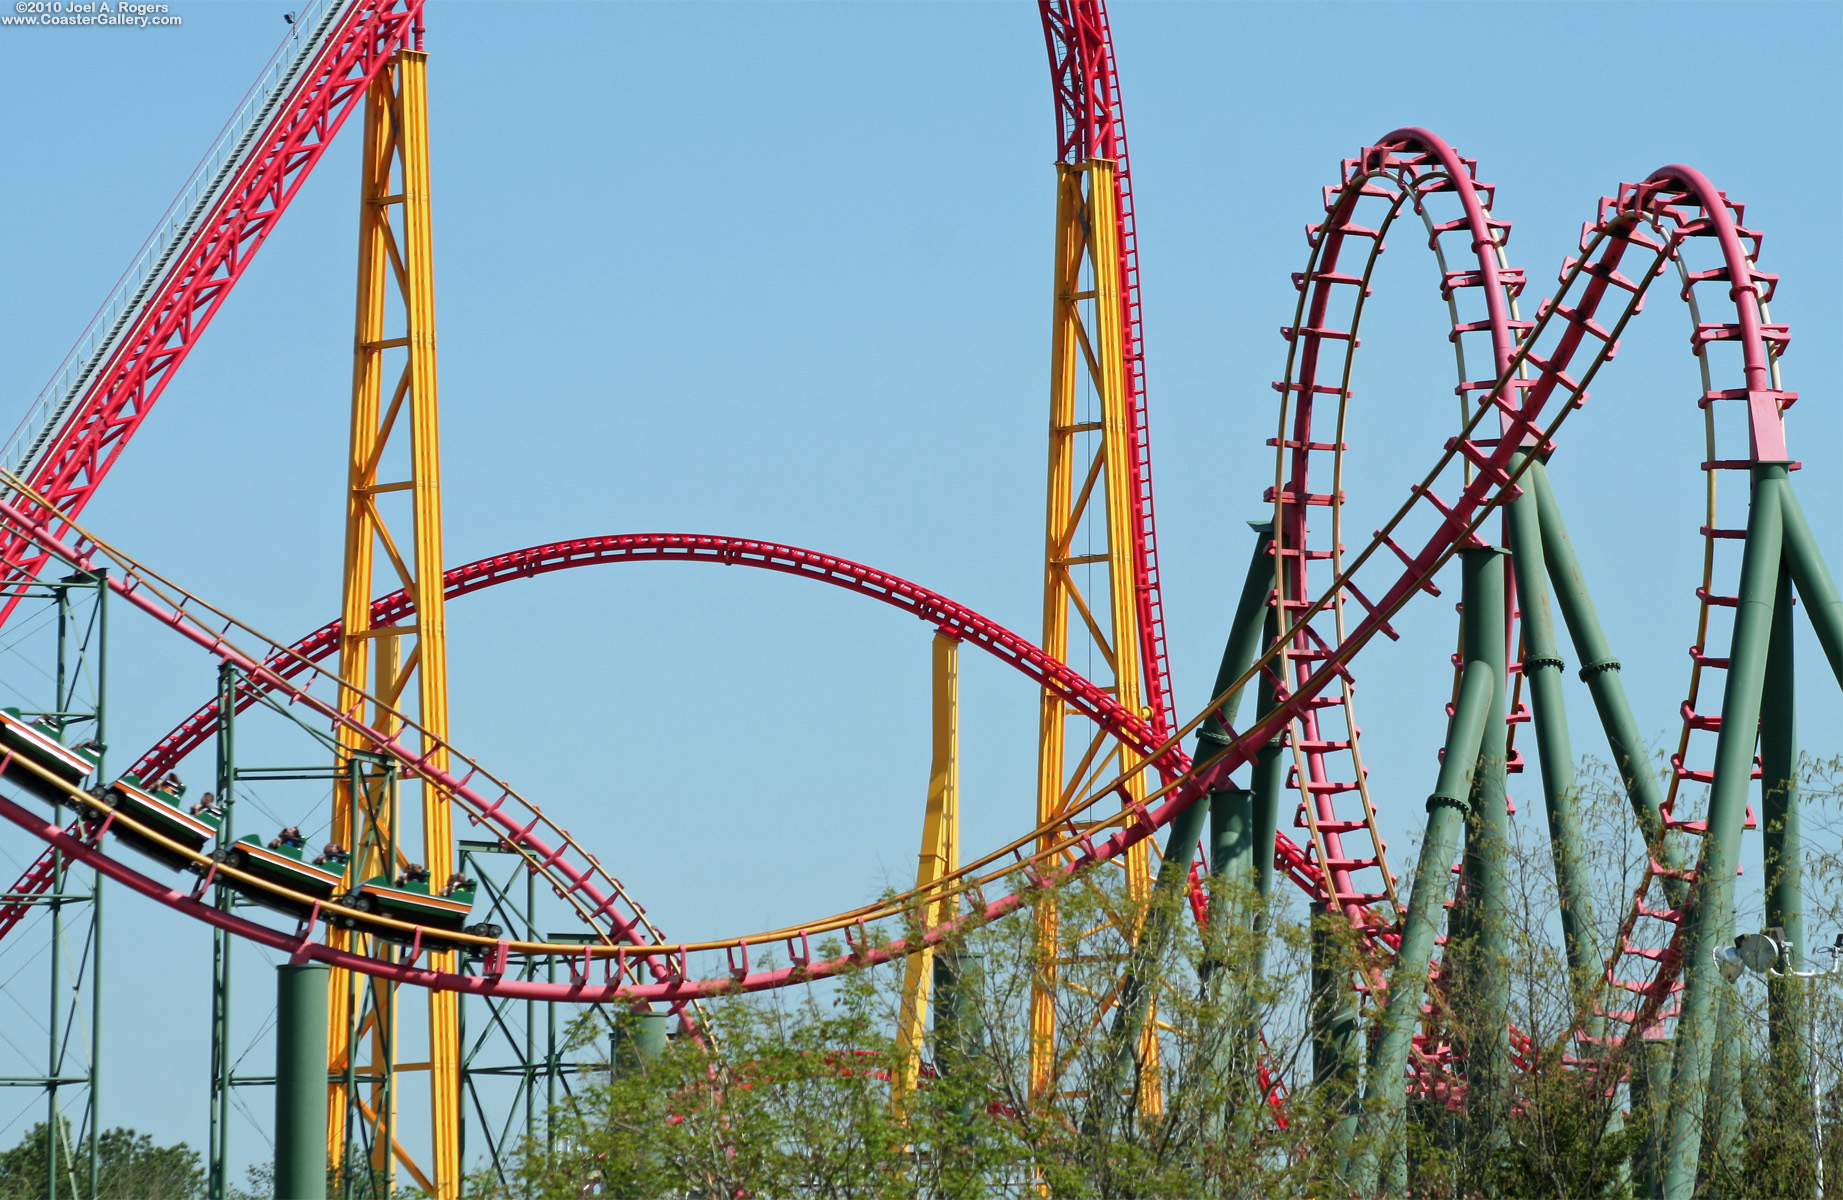 Stock photograph of a roller coaster